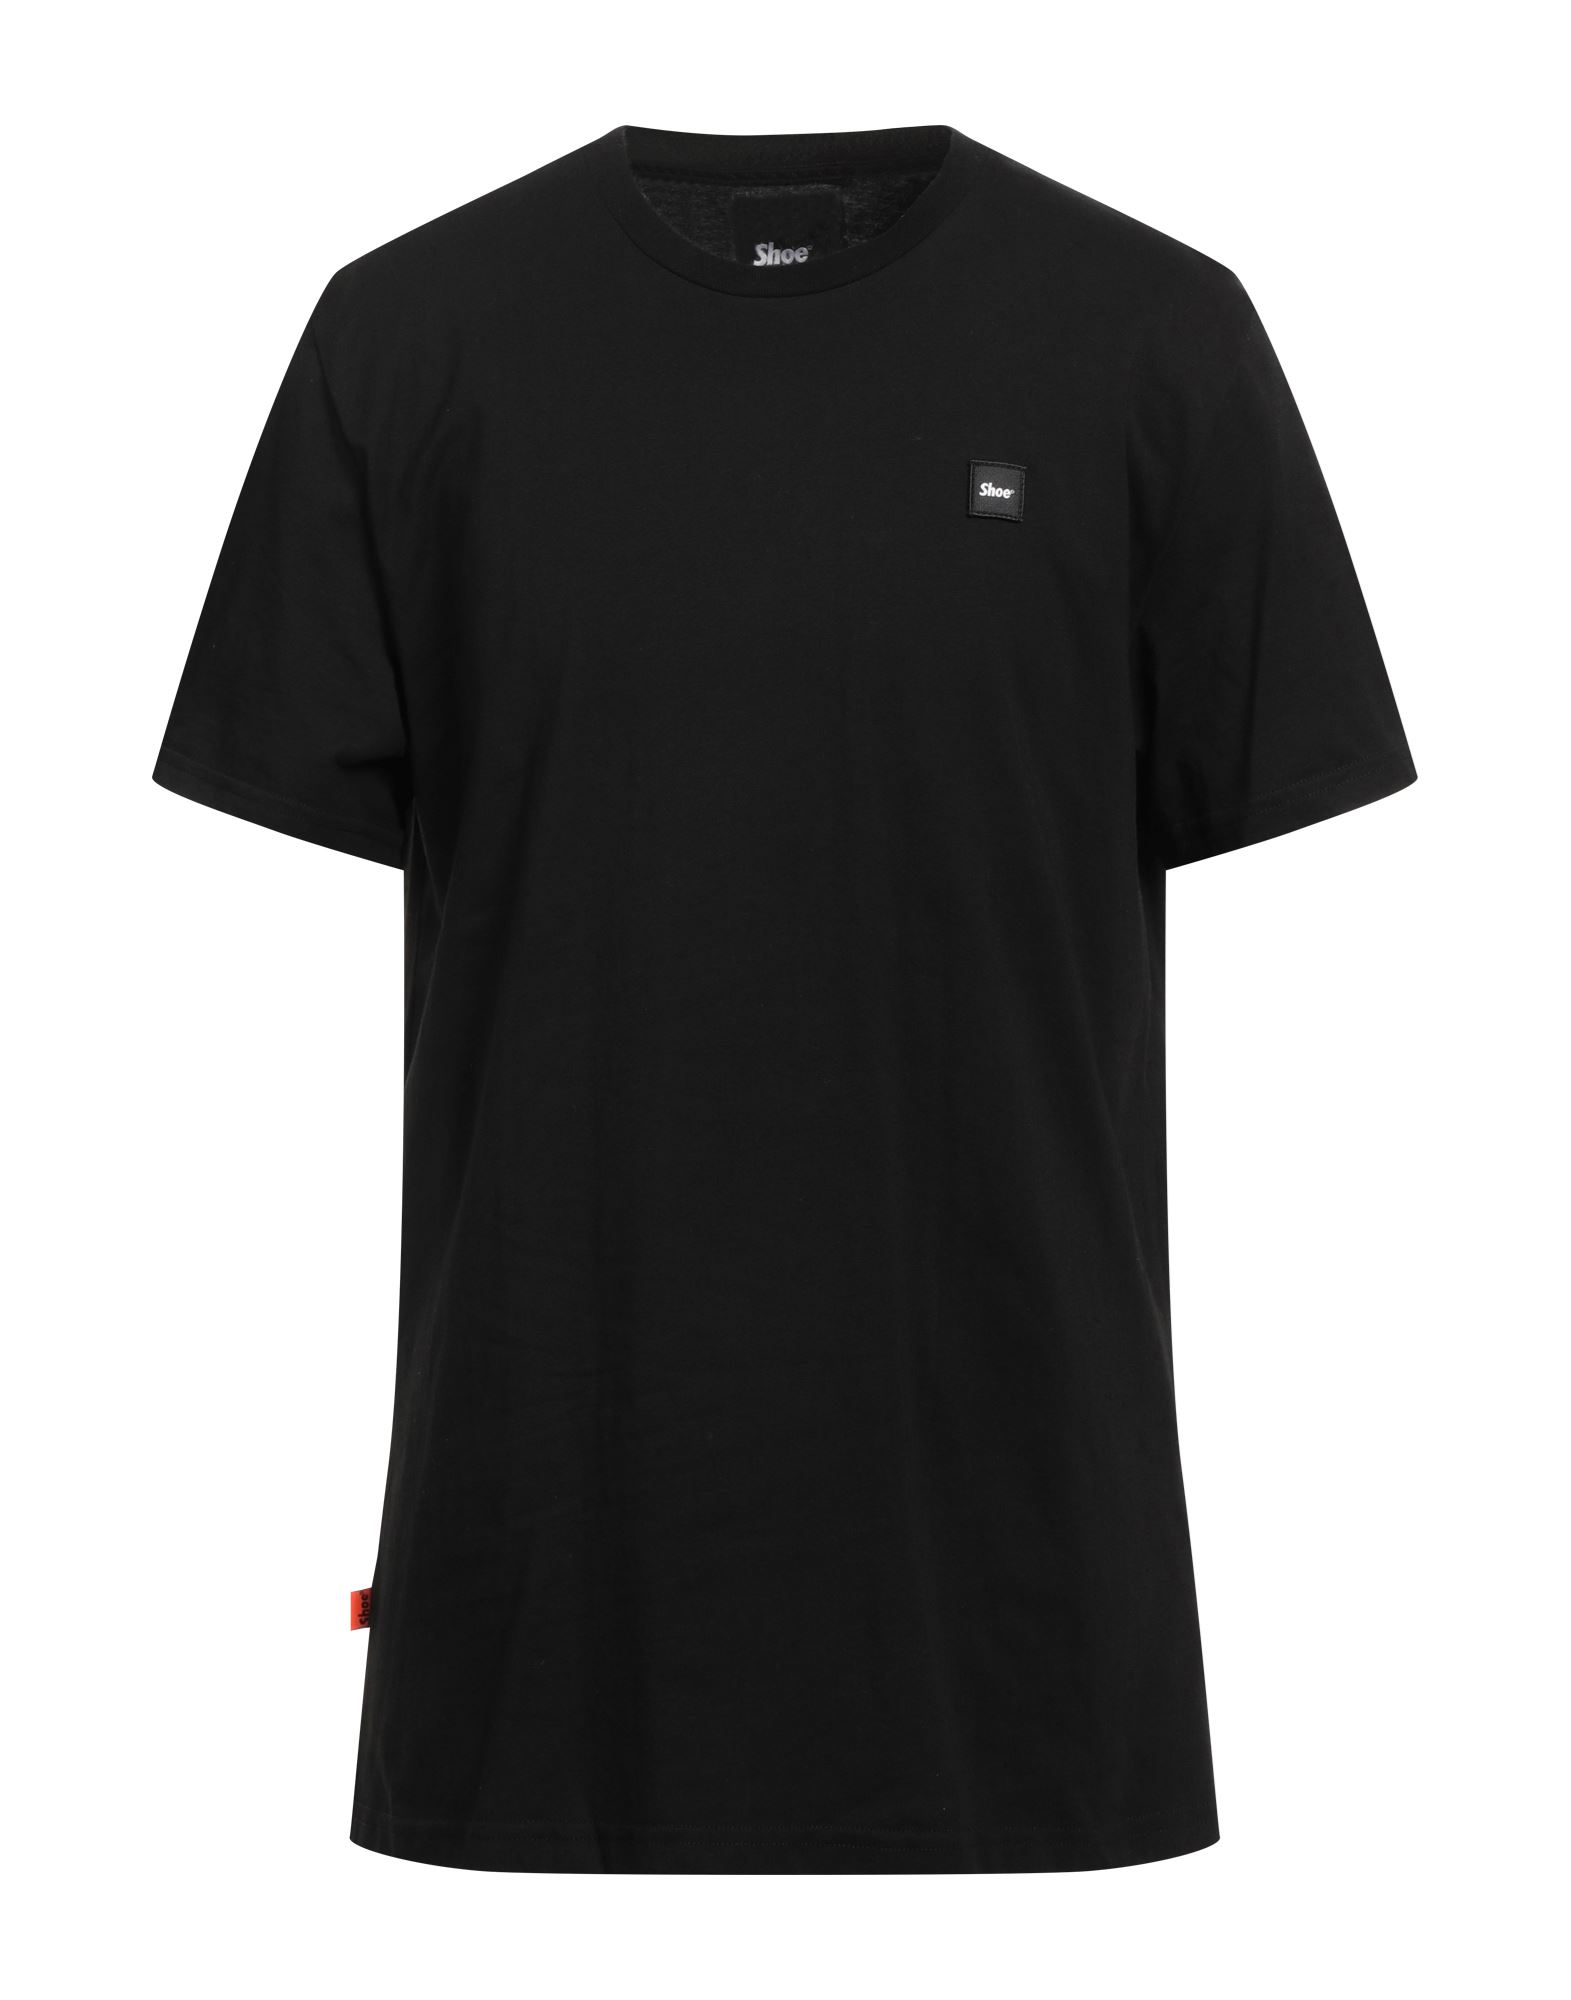 Shoe® Shoe Man T-shirt Black Size Xxl Cotton